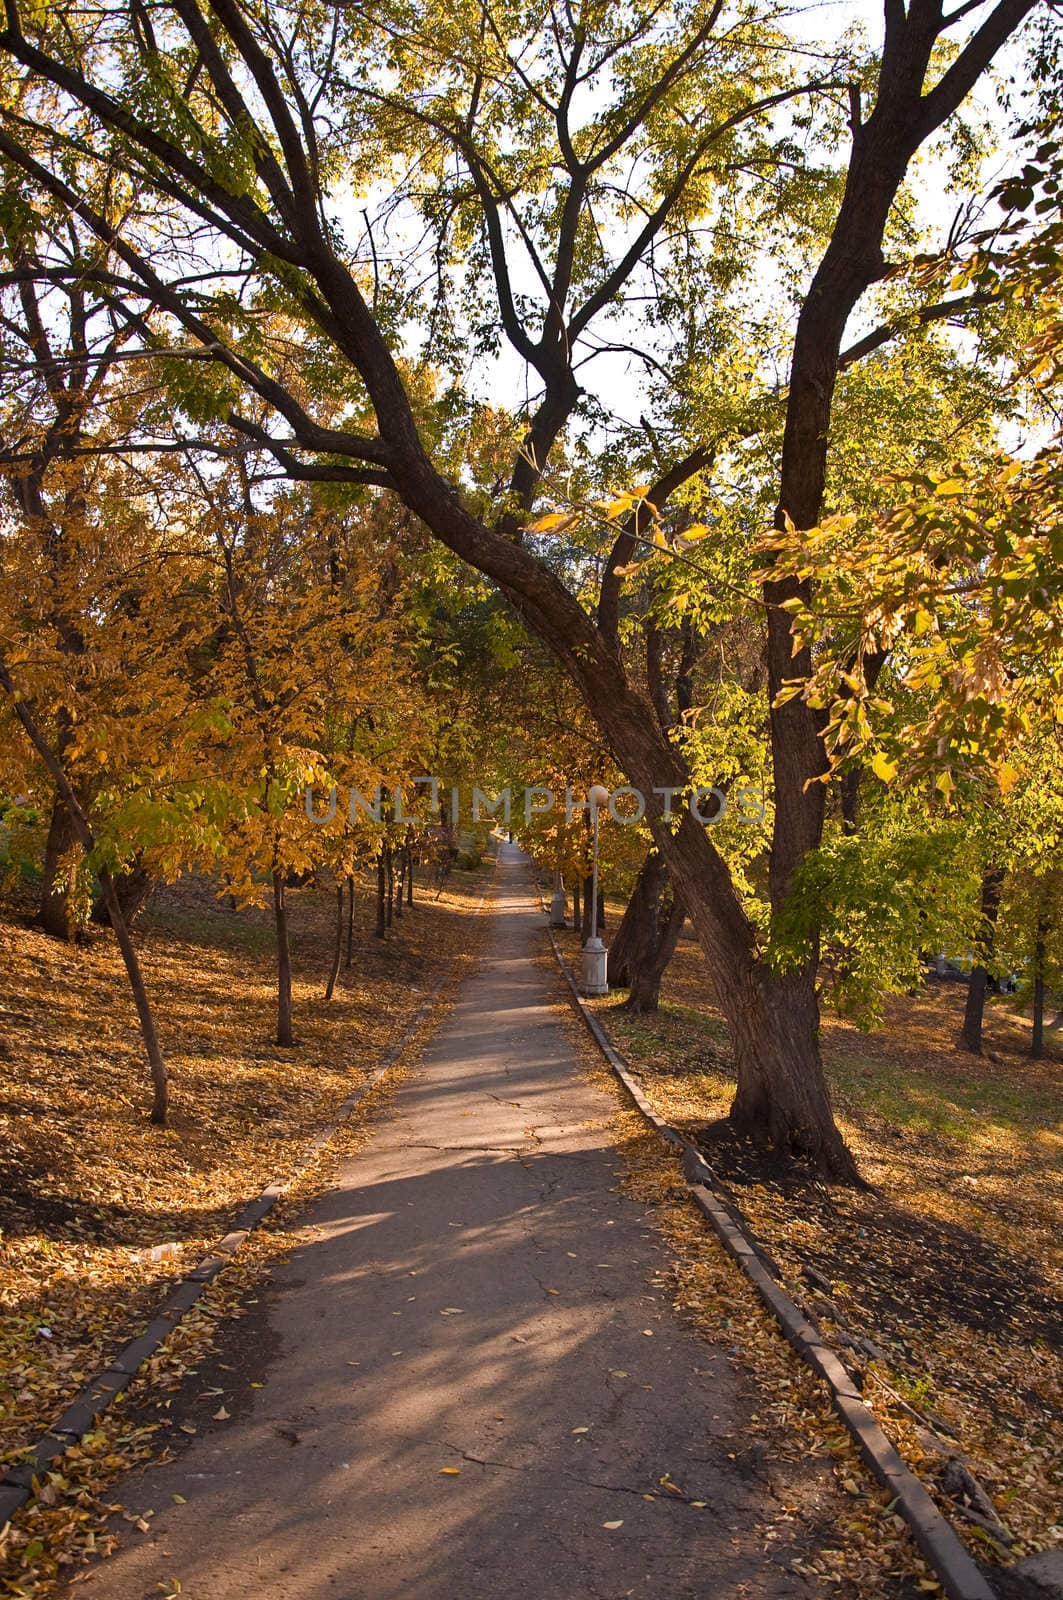 Autumn road in the park. Fallen yellow leaves. Autumn landscape